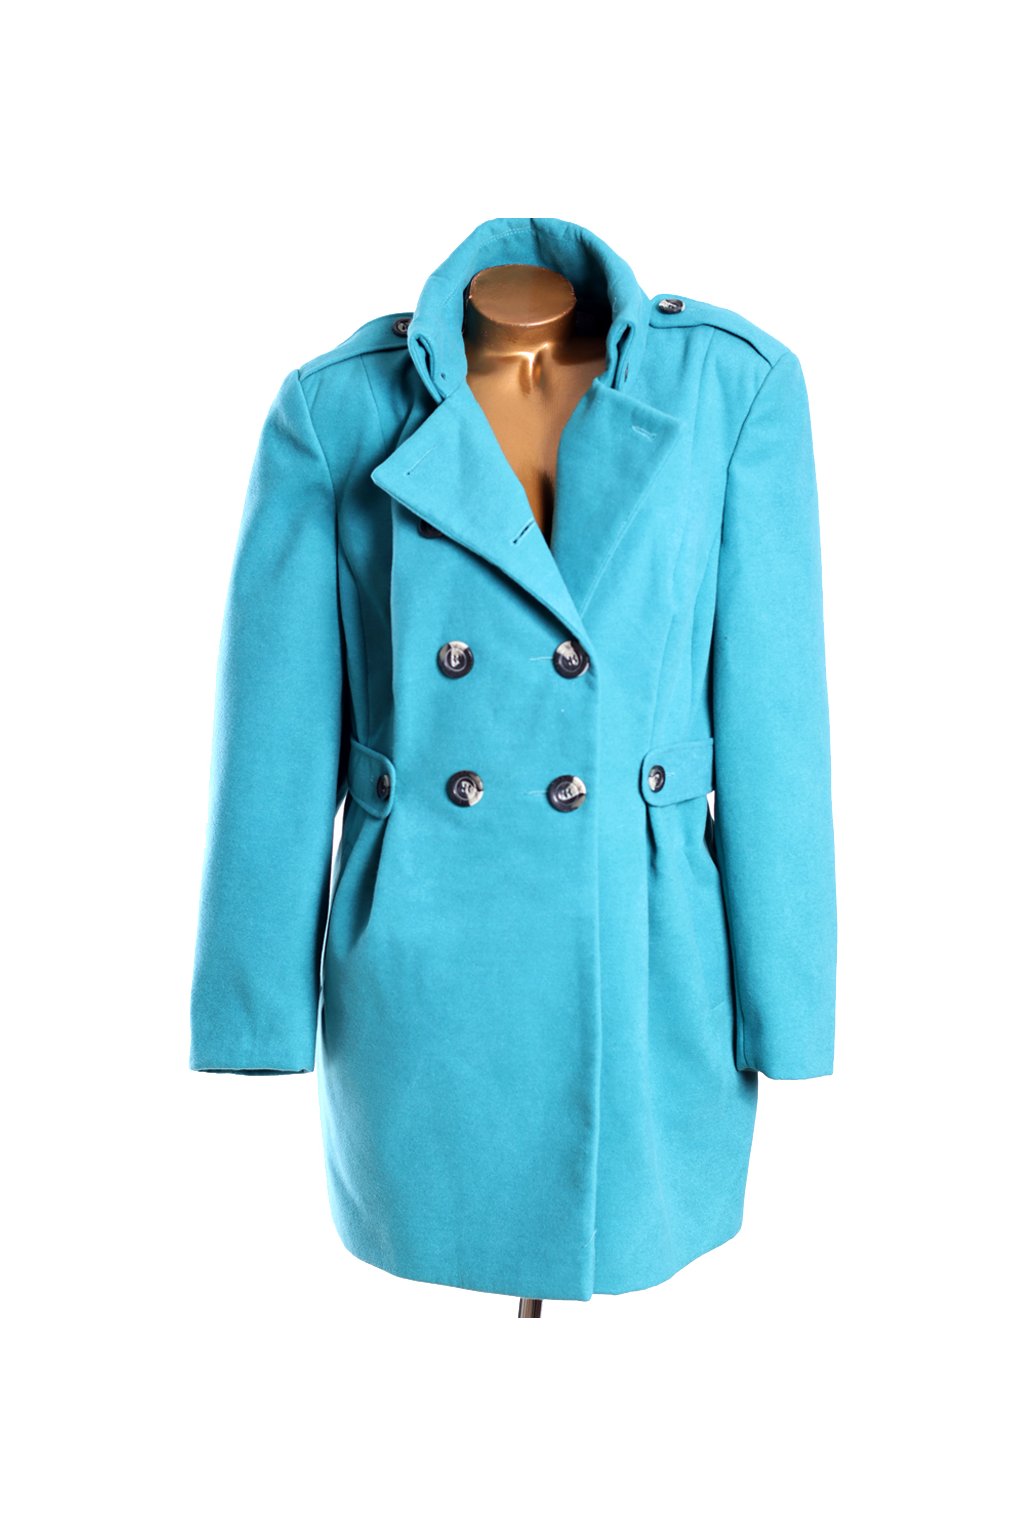 Dámský modrý elegantní kabát / NEXT - XXXL (48/50) / ANGLIE - Hitomat -  Monika Horká, móda pro plnoštíhléHitomat - Monika Horká, móda pro plnoštíhlé